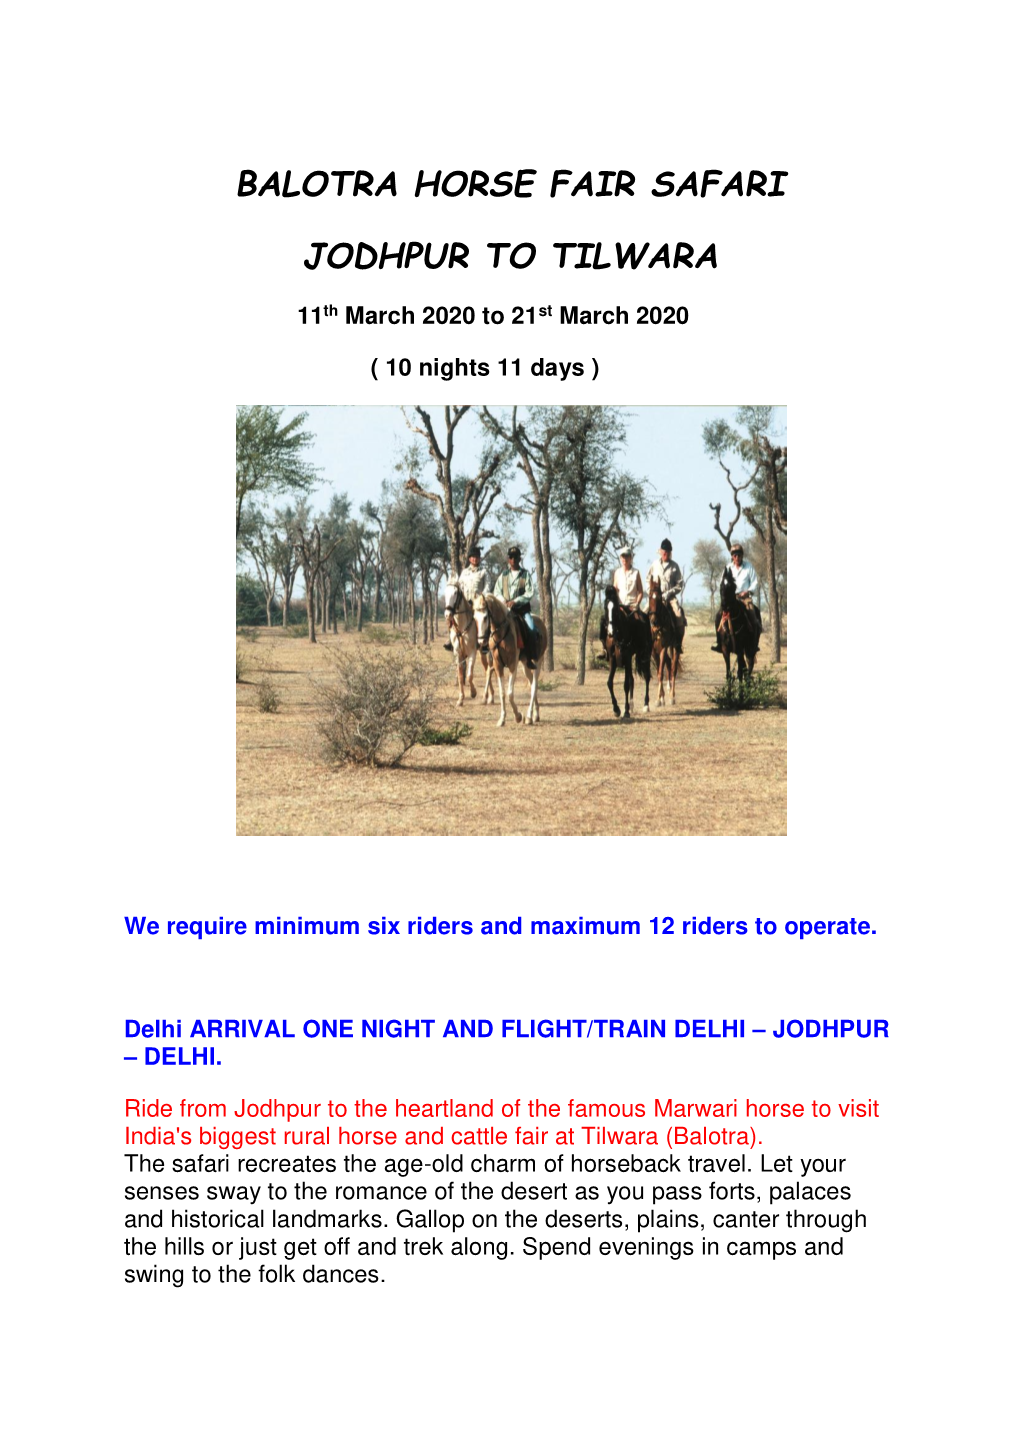 Balotra Horse Fair Safari Jodhpur to Tilwara